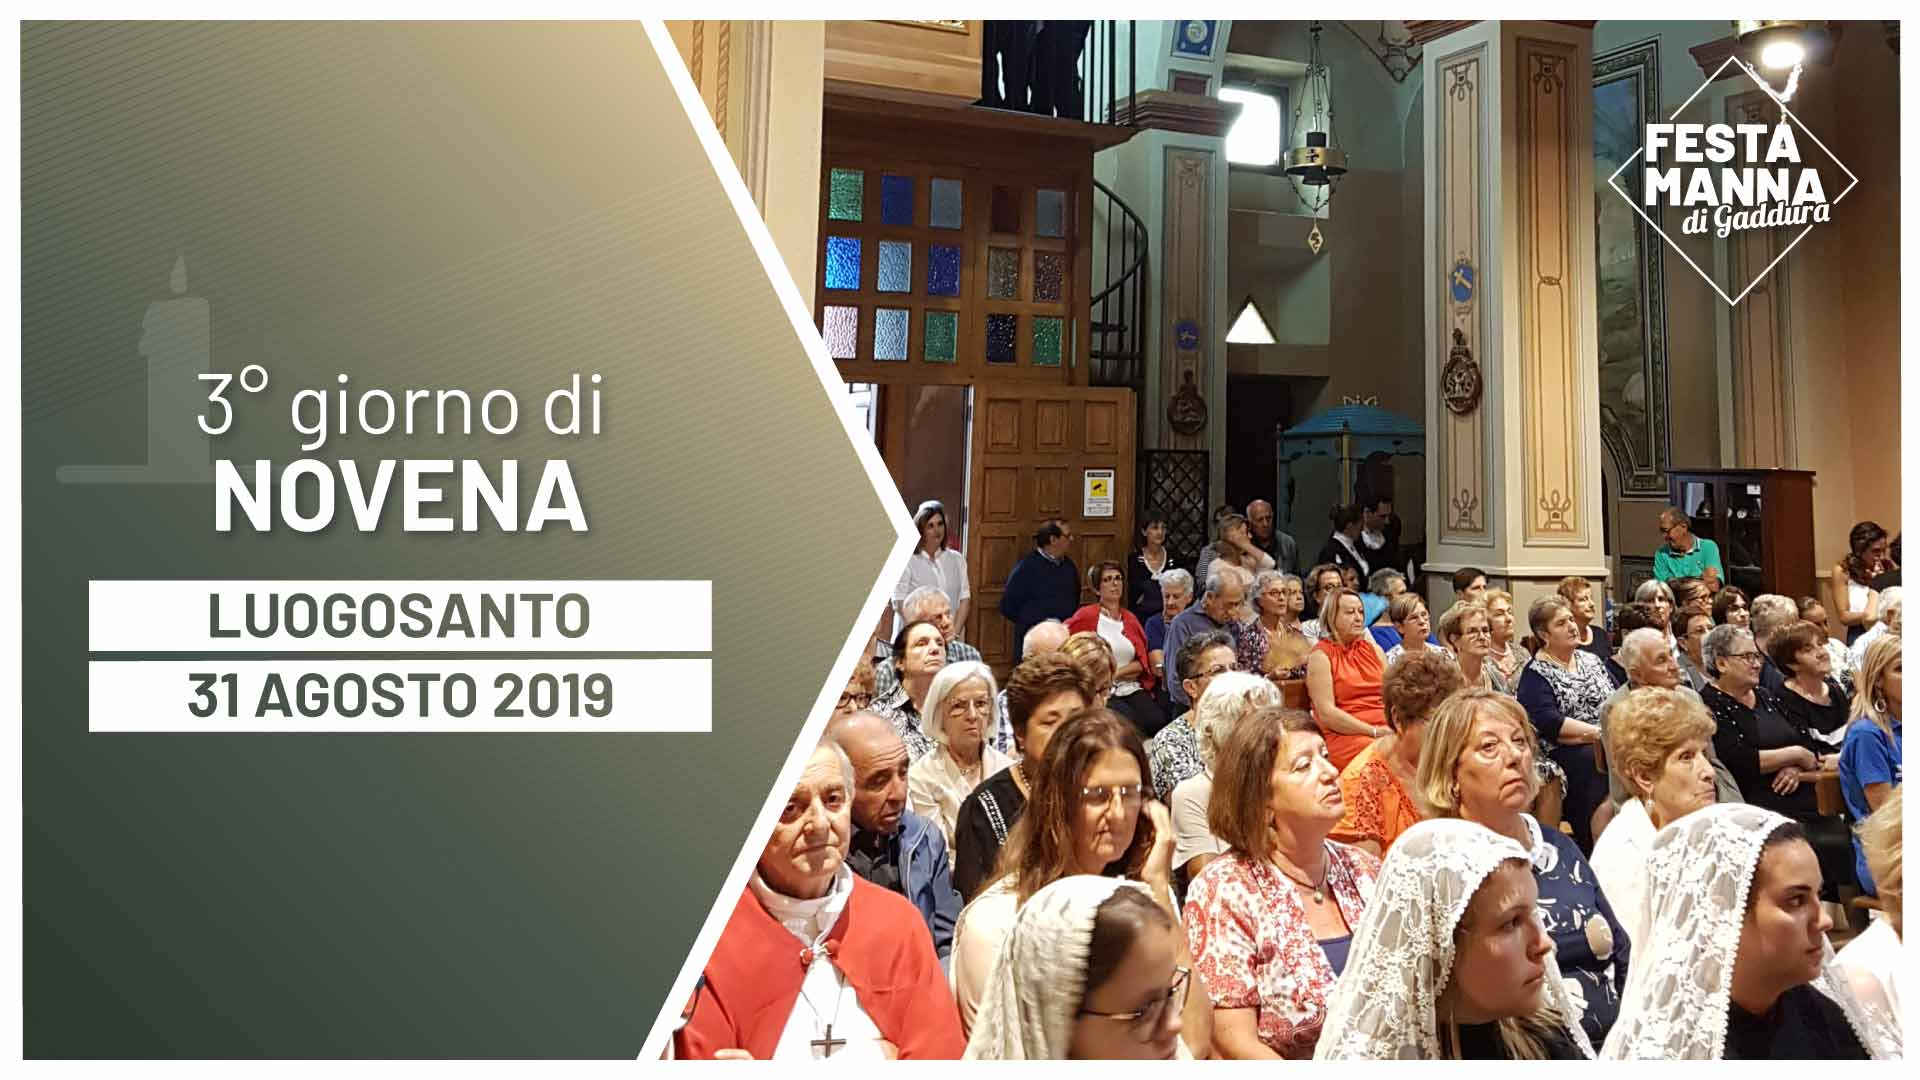 Third day of the novena | Festa Manna di Gaddura 2019